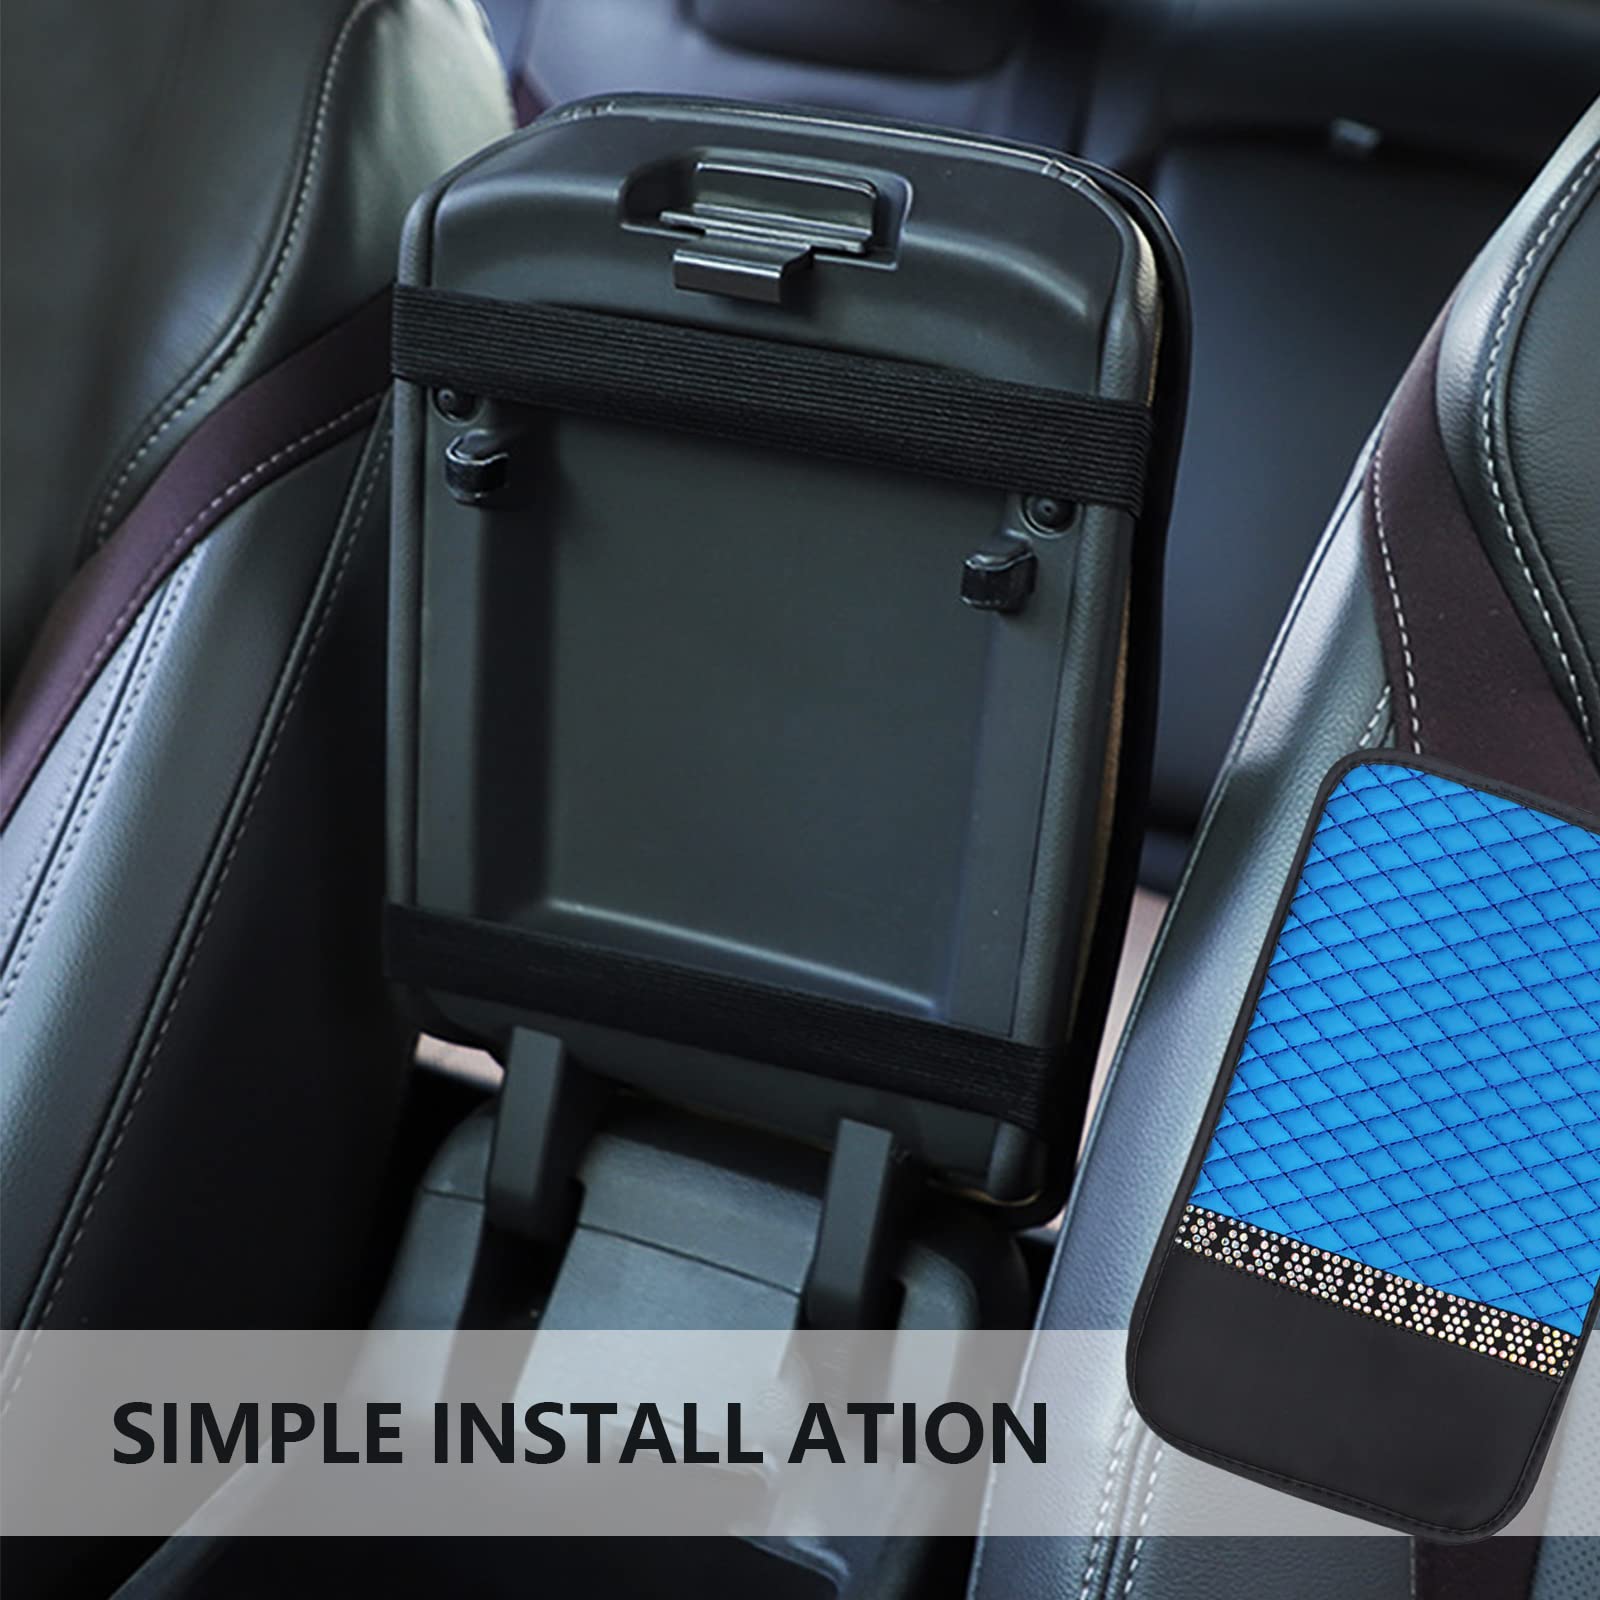 jeseny Pack-1 Car Auto Armrest Cover Pad, Car Central Armrest Case Cover with Glossy Crystal Rhinestone, Universal Car Armrest Cushion Protector (Blue)